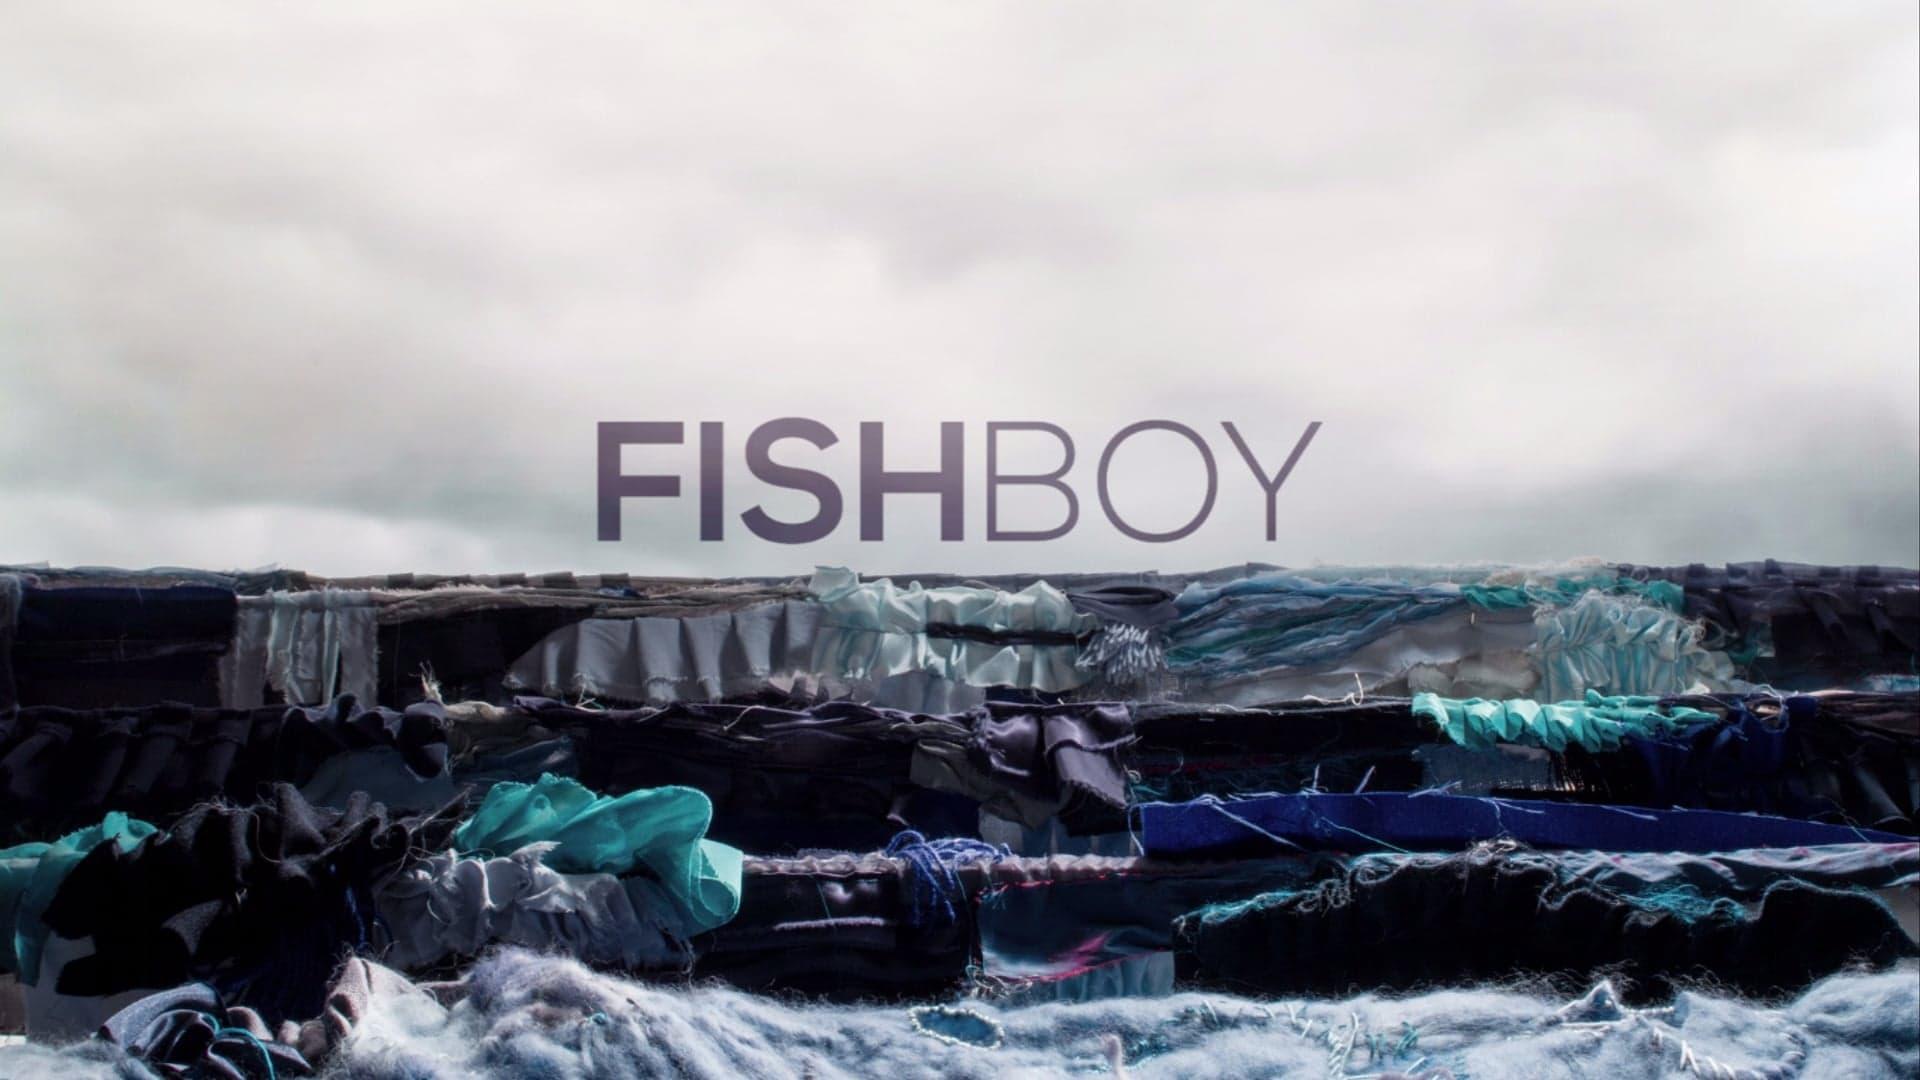 Fishboy backdrop